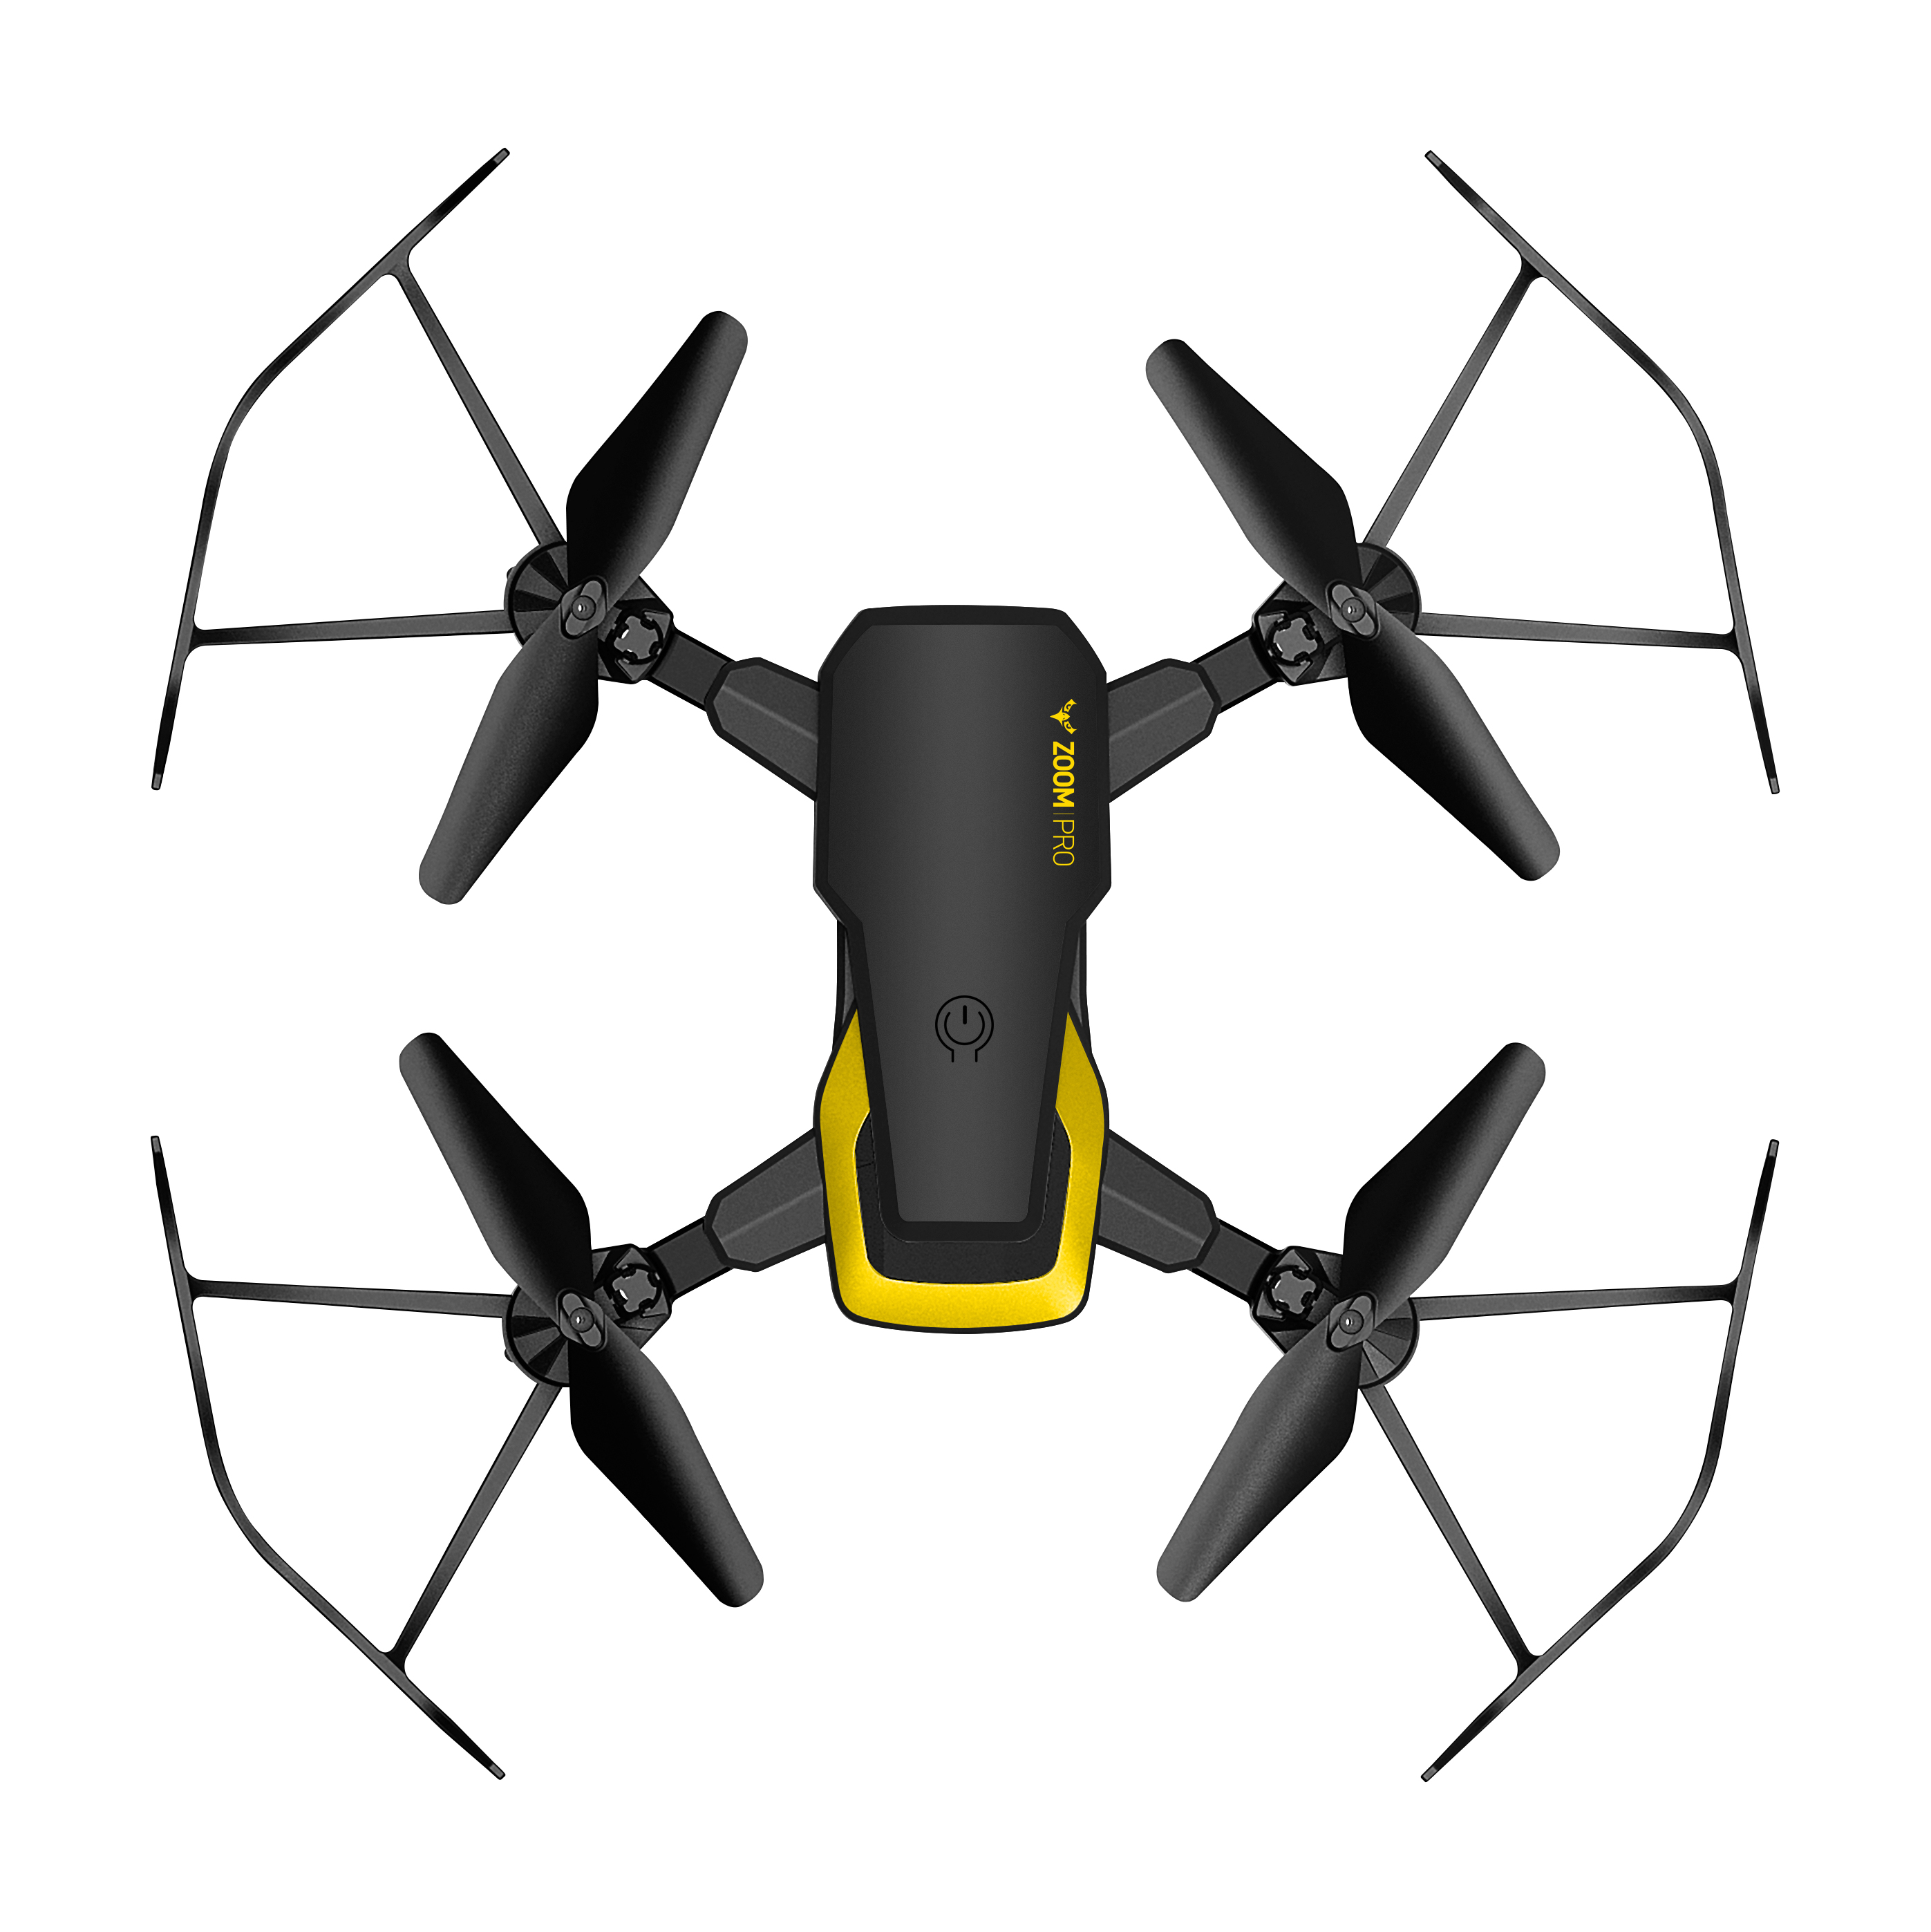 CX007-2B Yedek Bataryalı Zoom Pro Smart Drone